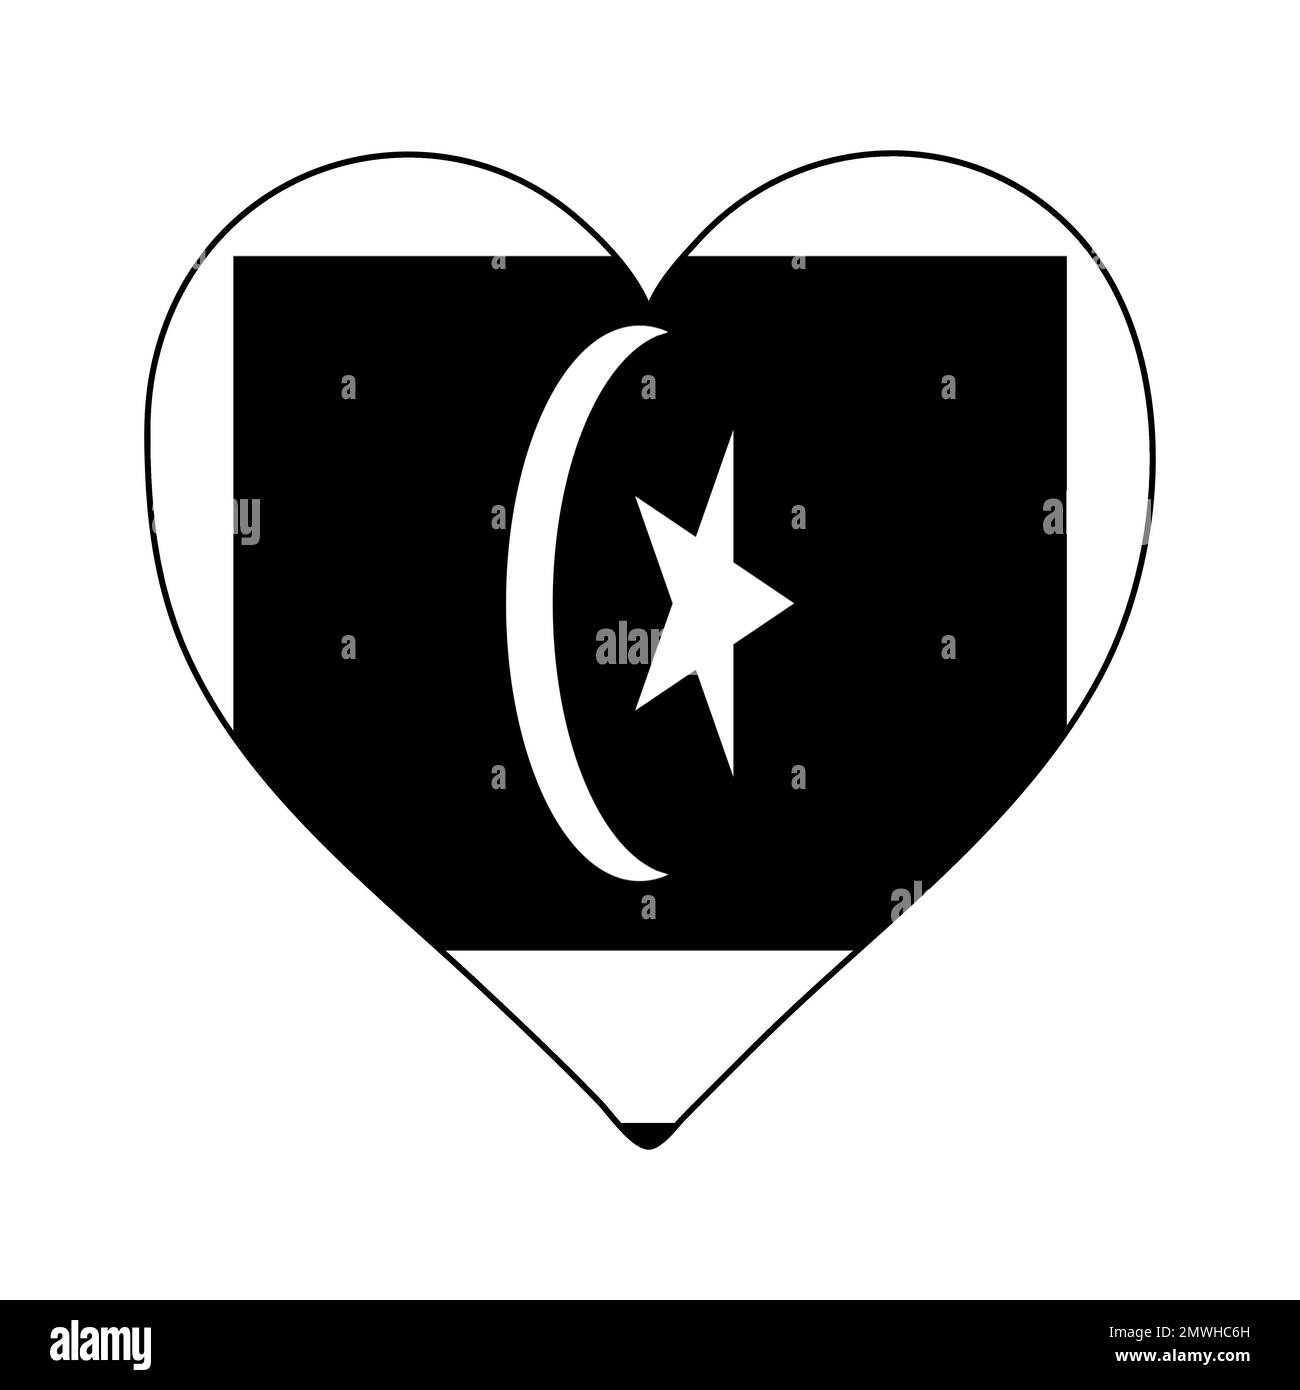 Terengganu Heart Shape Flag. Love Terengganu. State in Malaysia. Visit Malaysia. Vector Illustration Graphic Design. Stock Vector